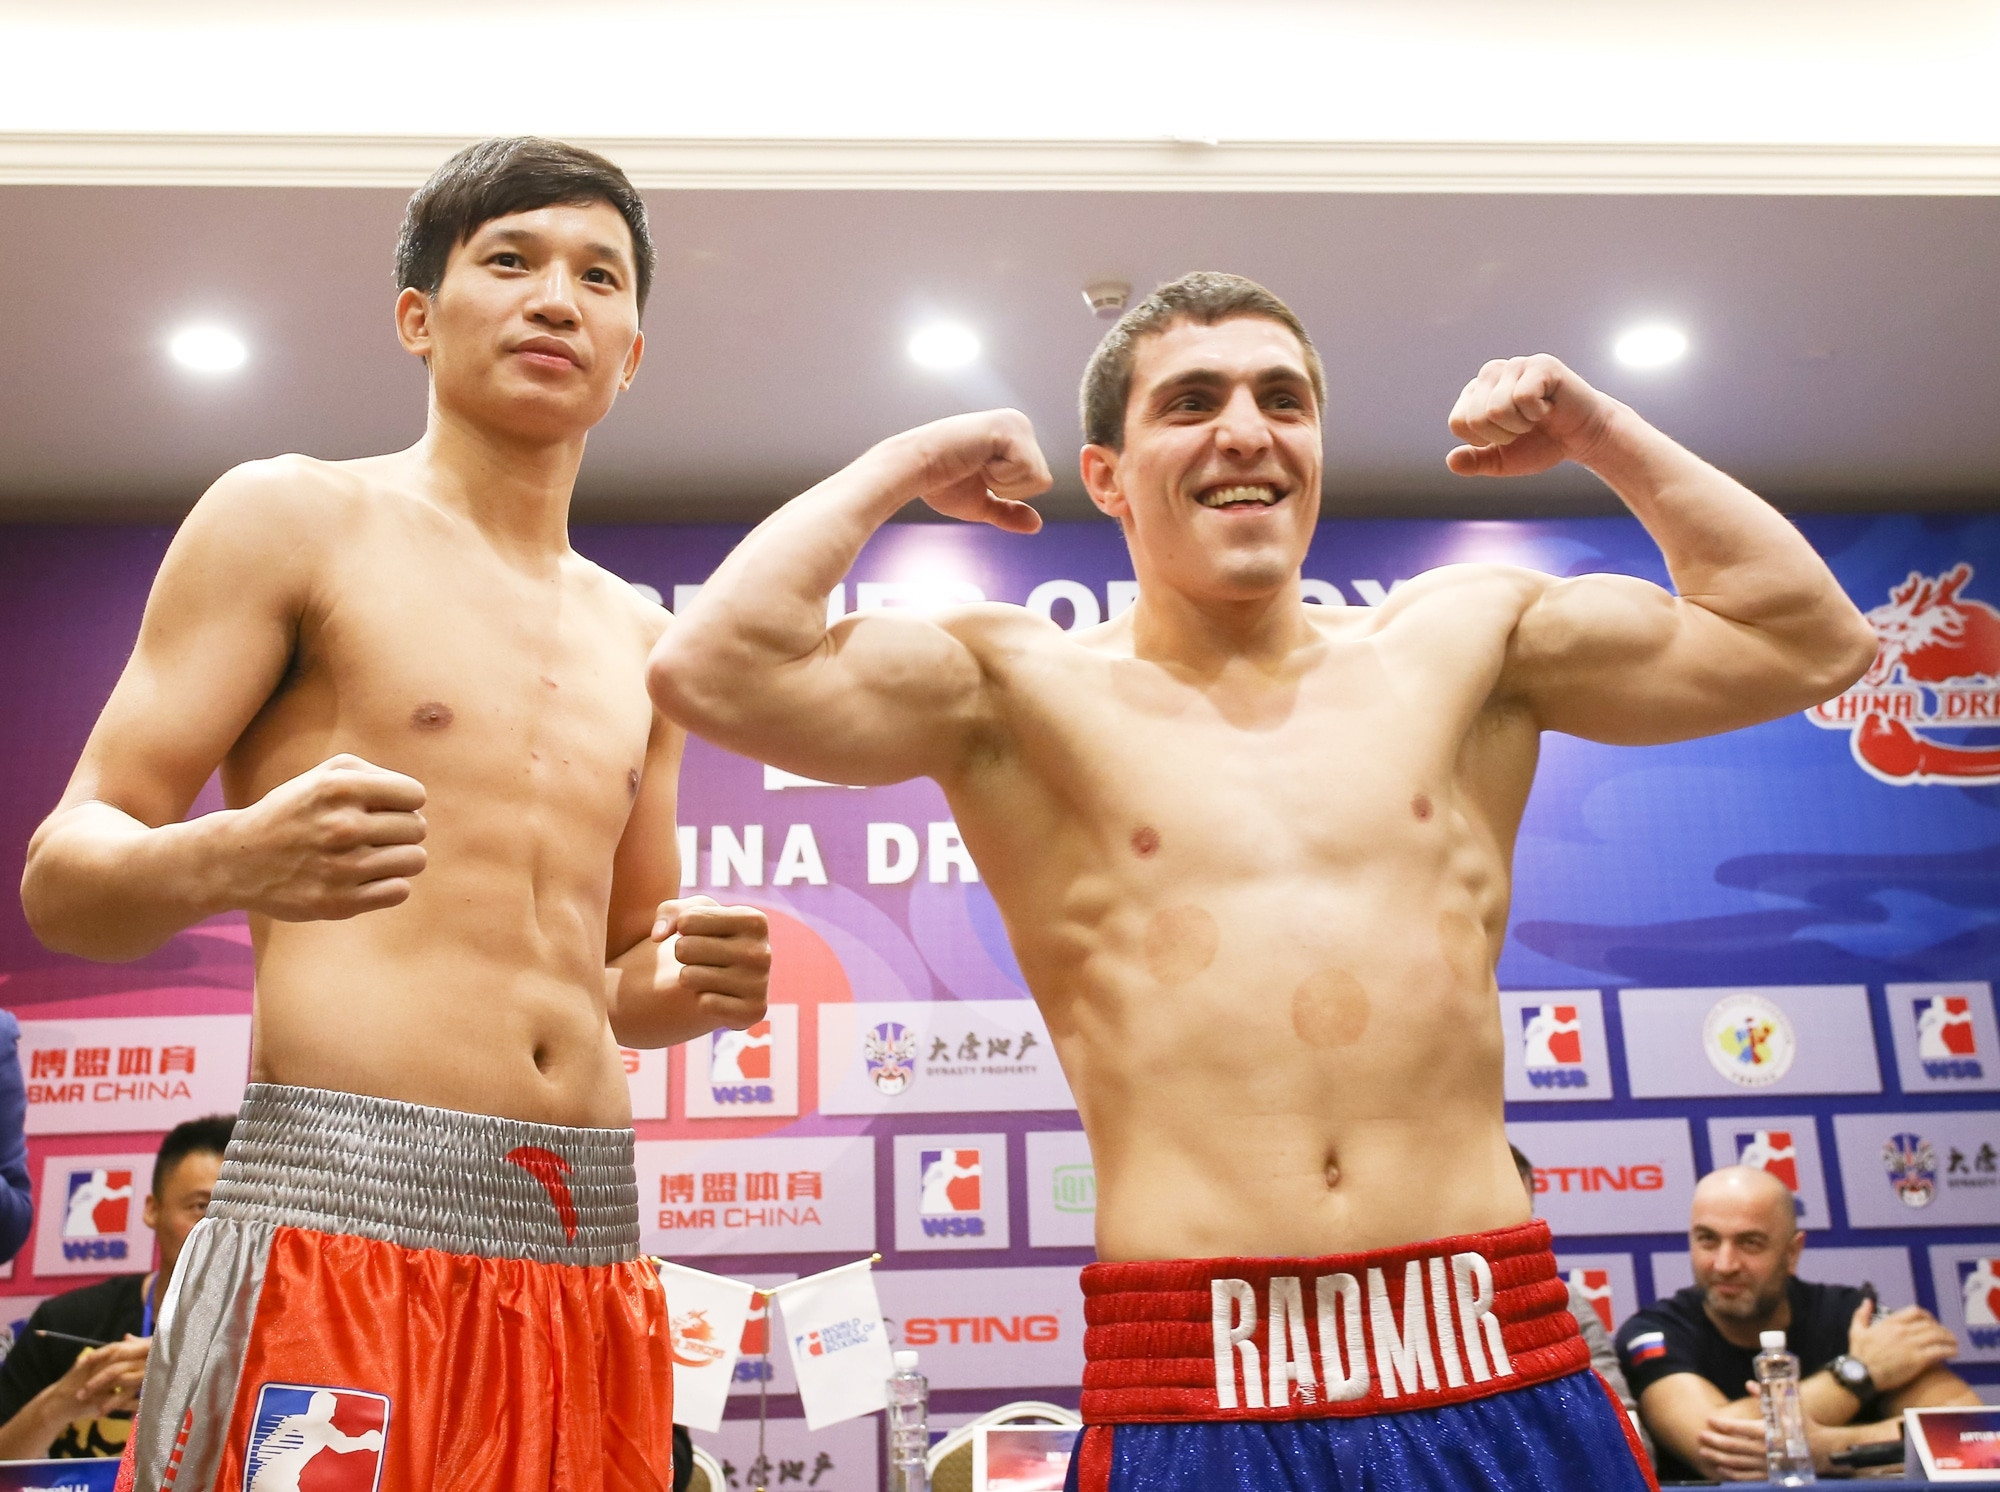 Radmir Abdurakhmanov was among the Patriot Boxing Team winners ©WSB